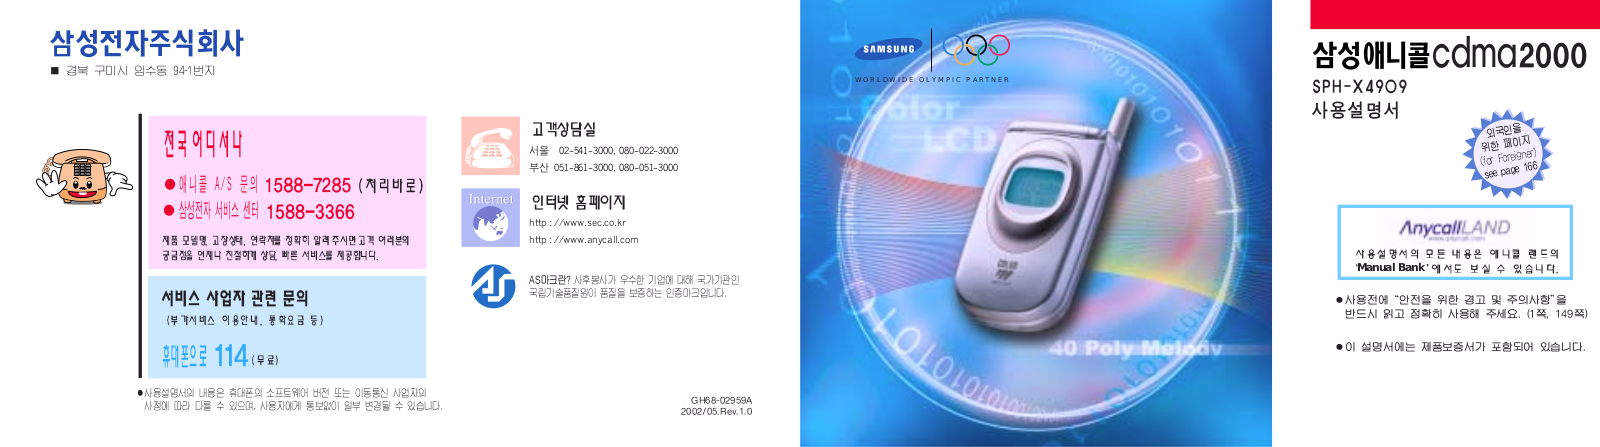 Samsung SPH-X4909 User Manual